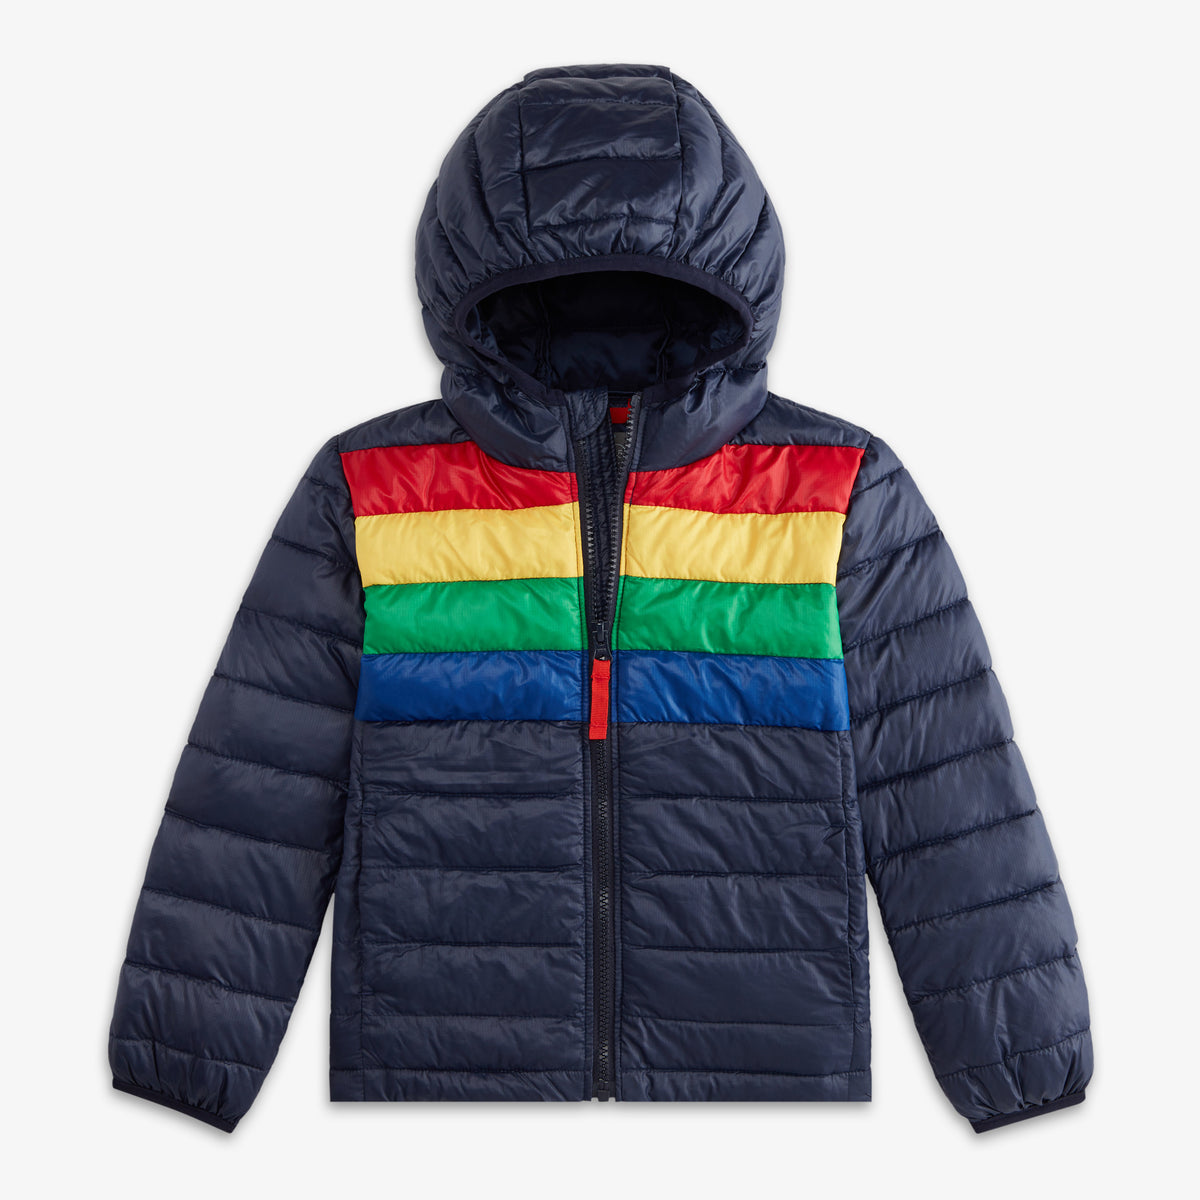 Sour Puff Shop Rainbow Puffed Jacket